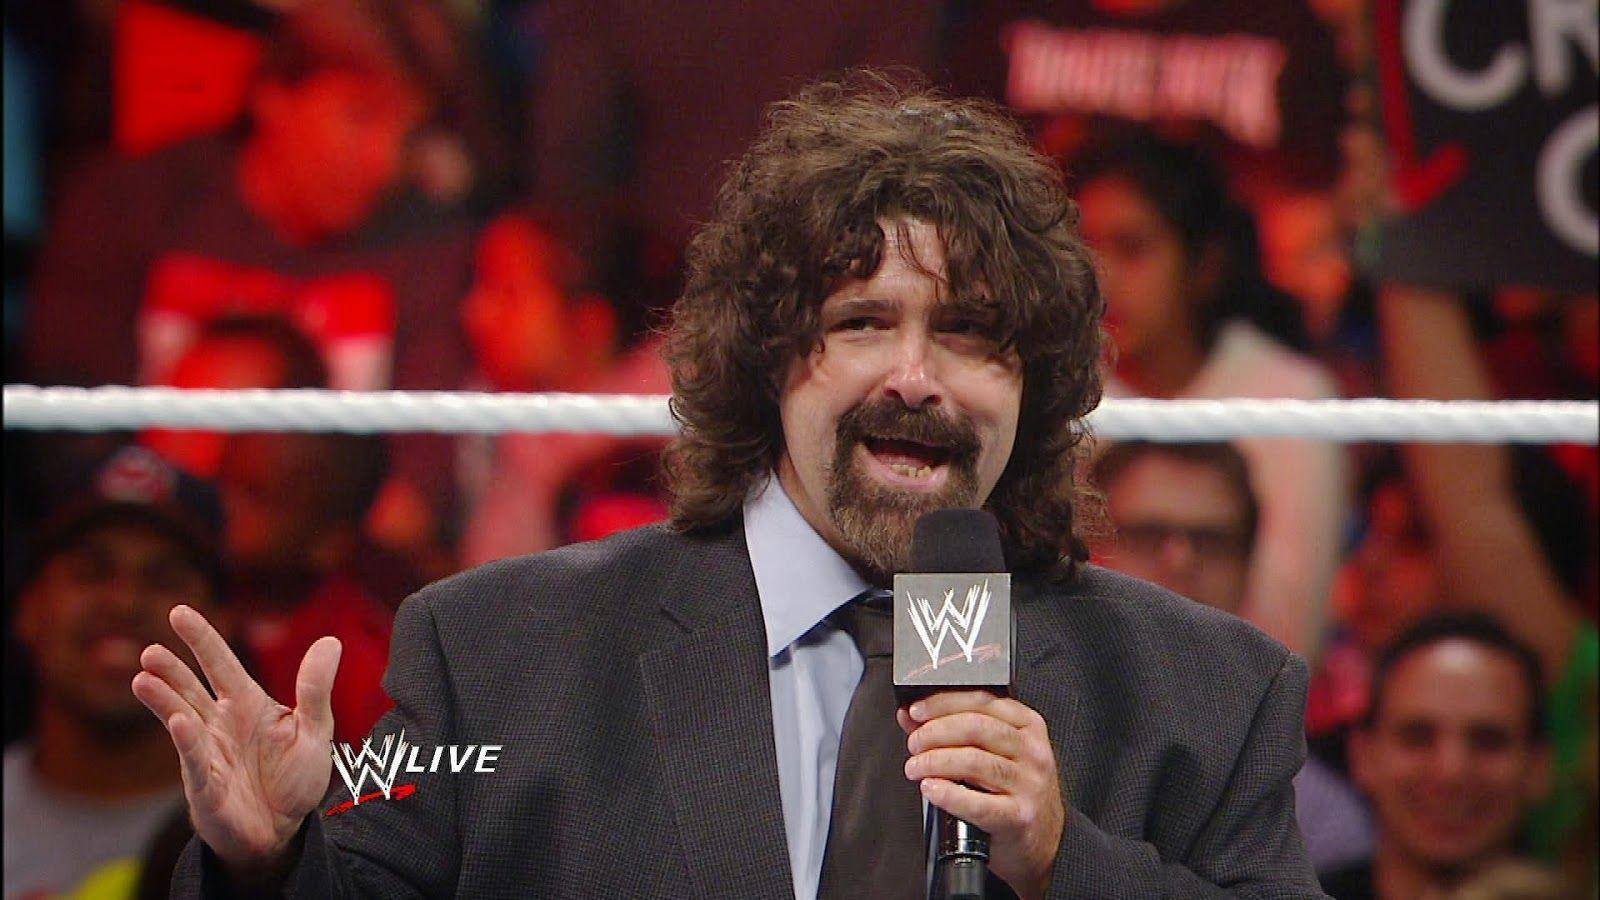 Mick Foley HD Wallpaper Free Download. WWE HD WALLPAPER FREE DOWNLOAD